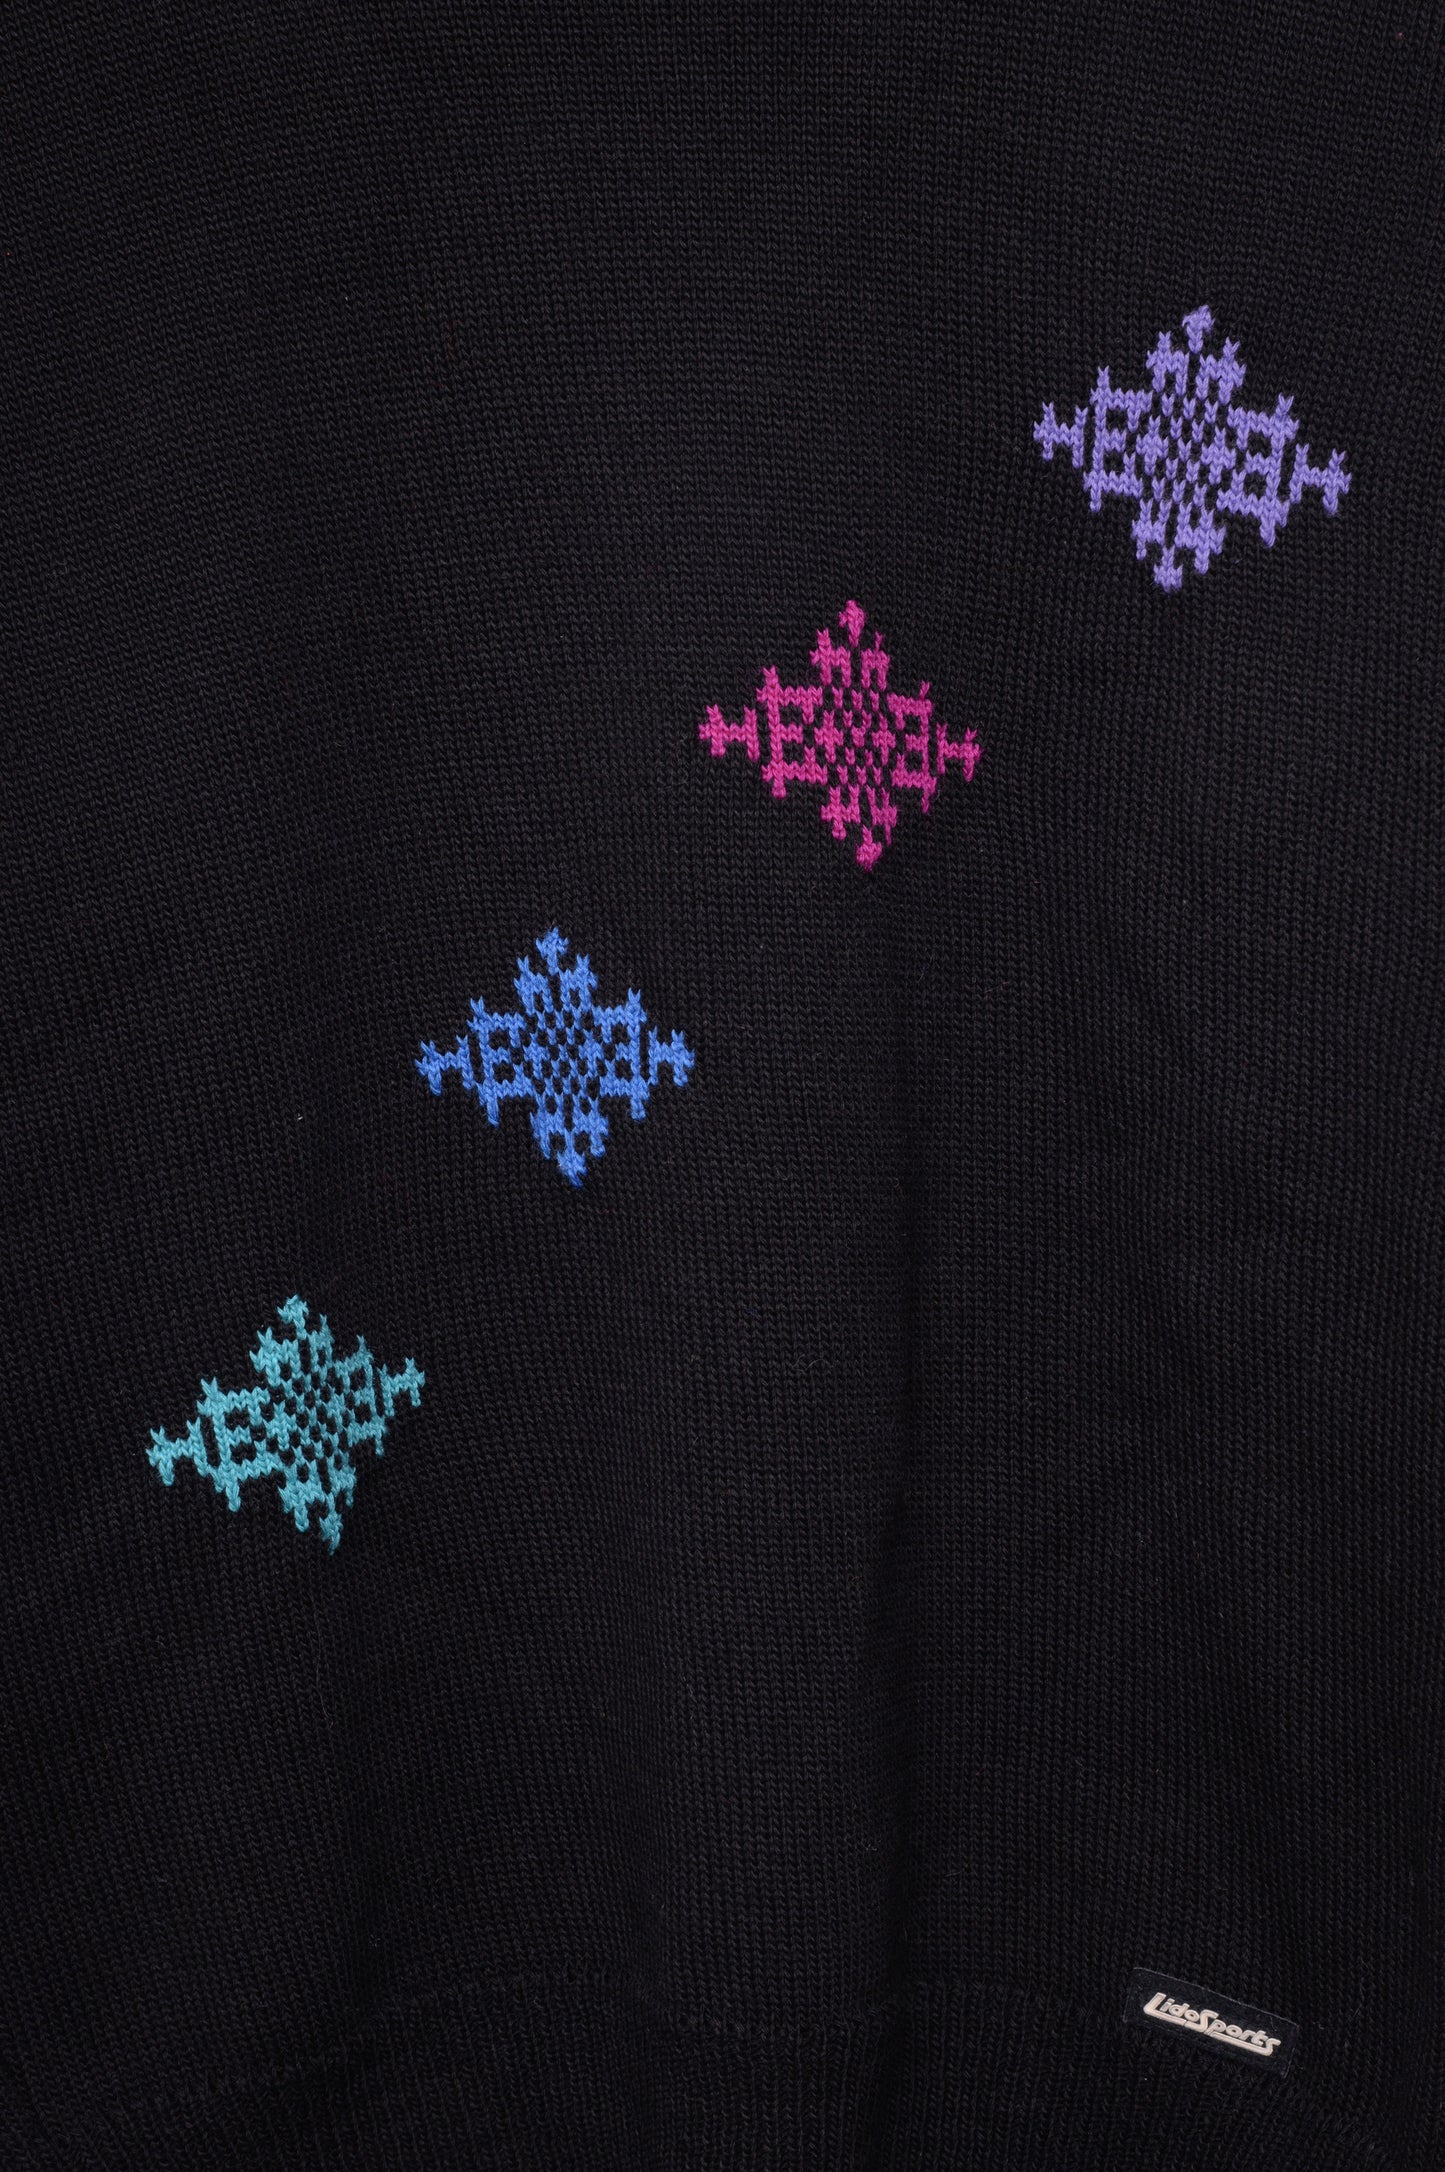 Black Wool Geo Sweater